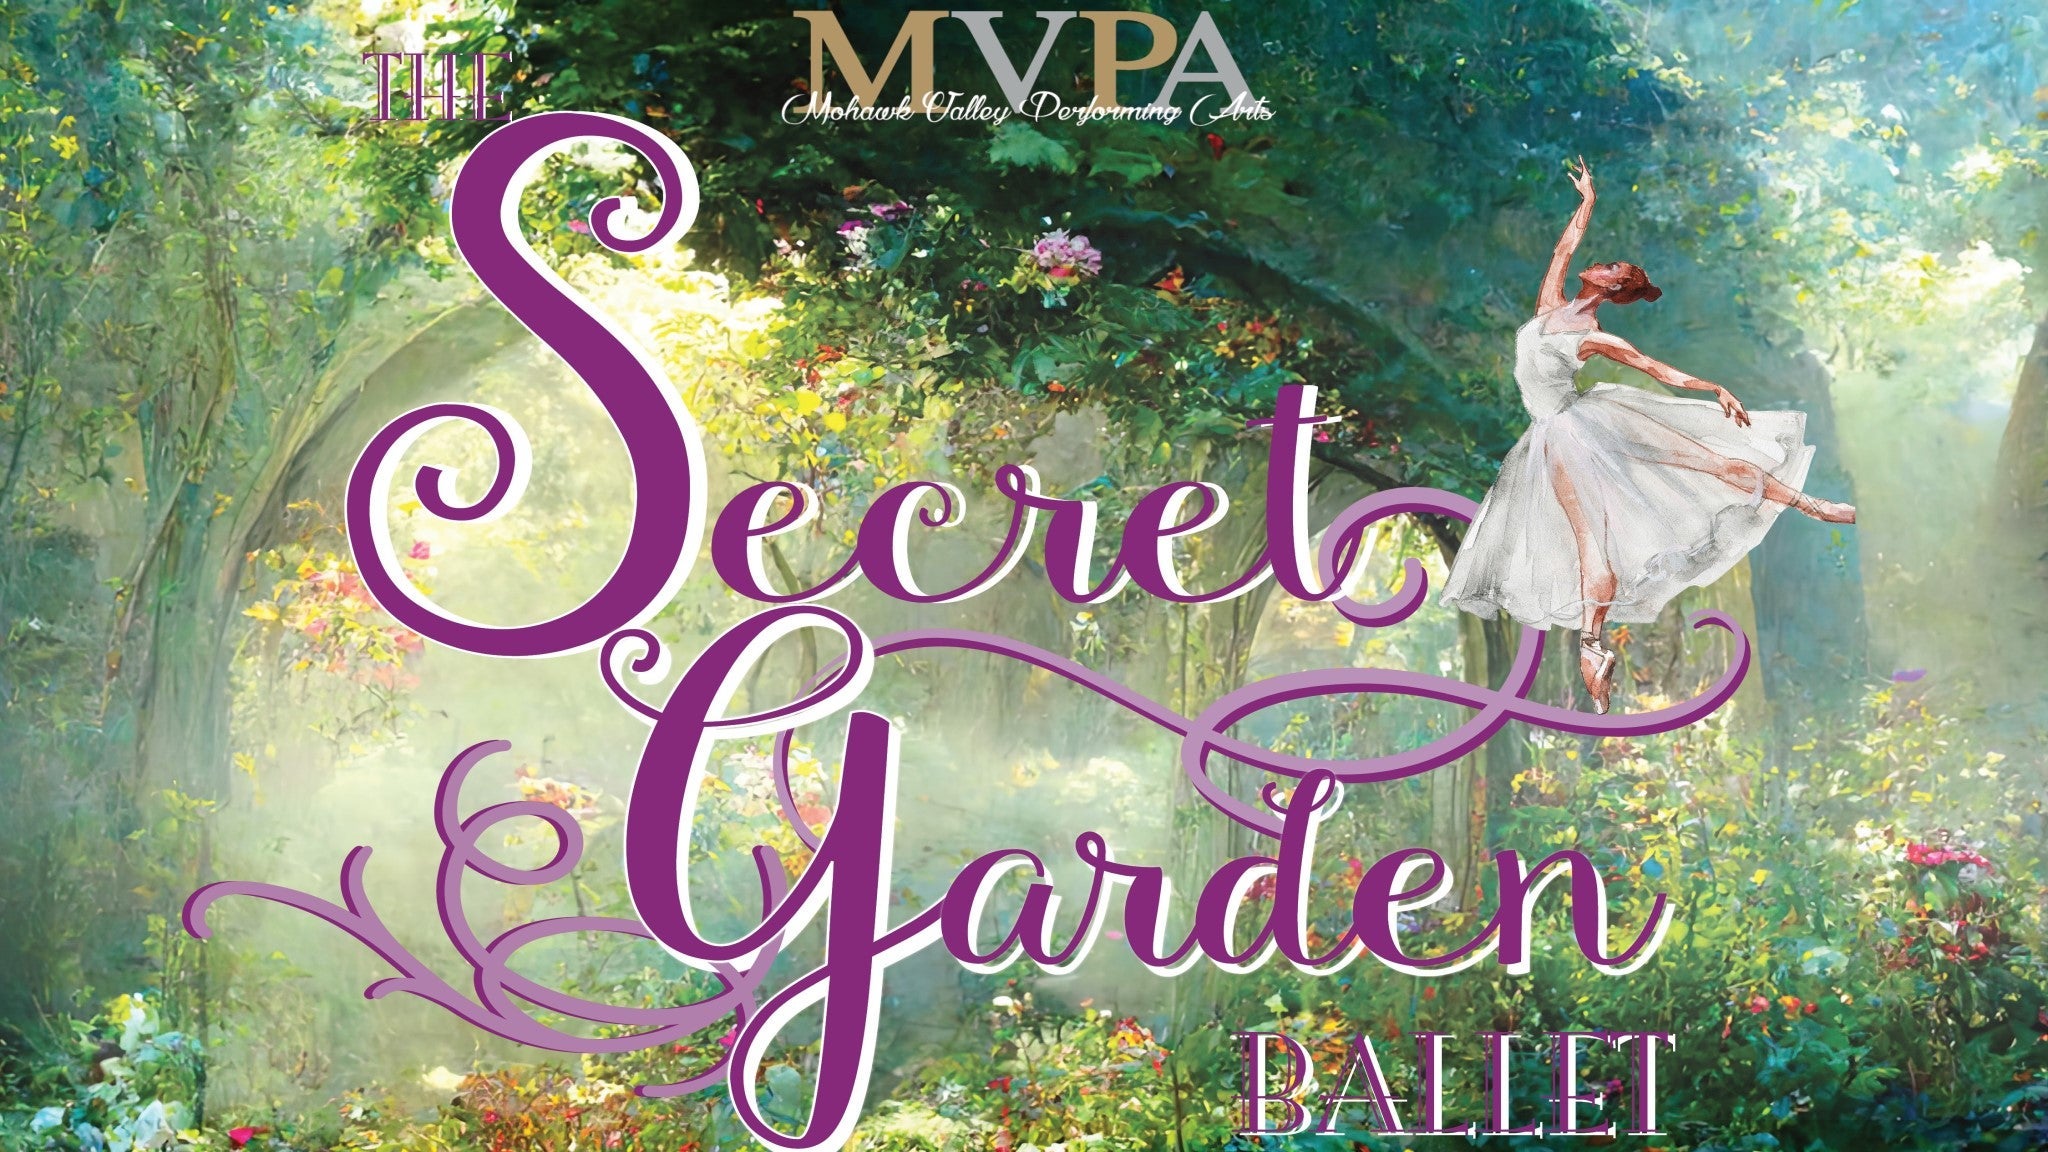 The Secret Garden Ballet at The Stanley